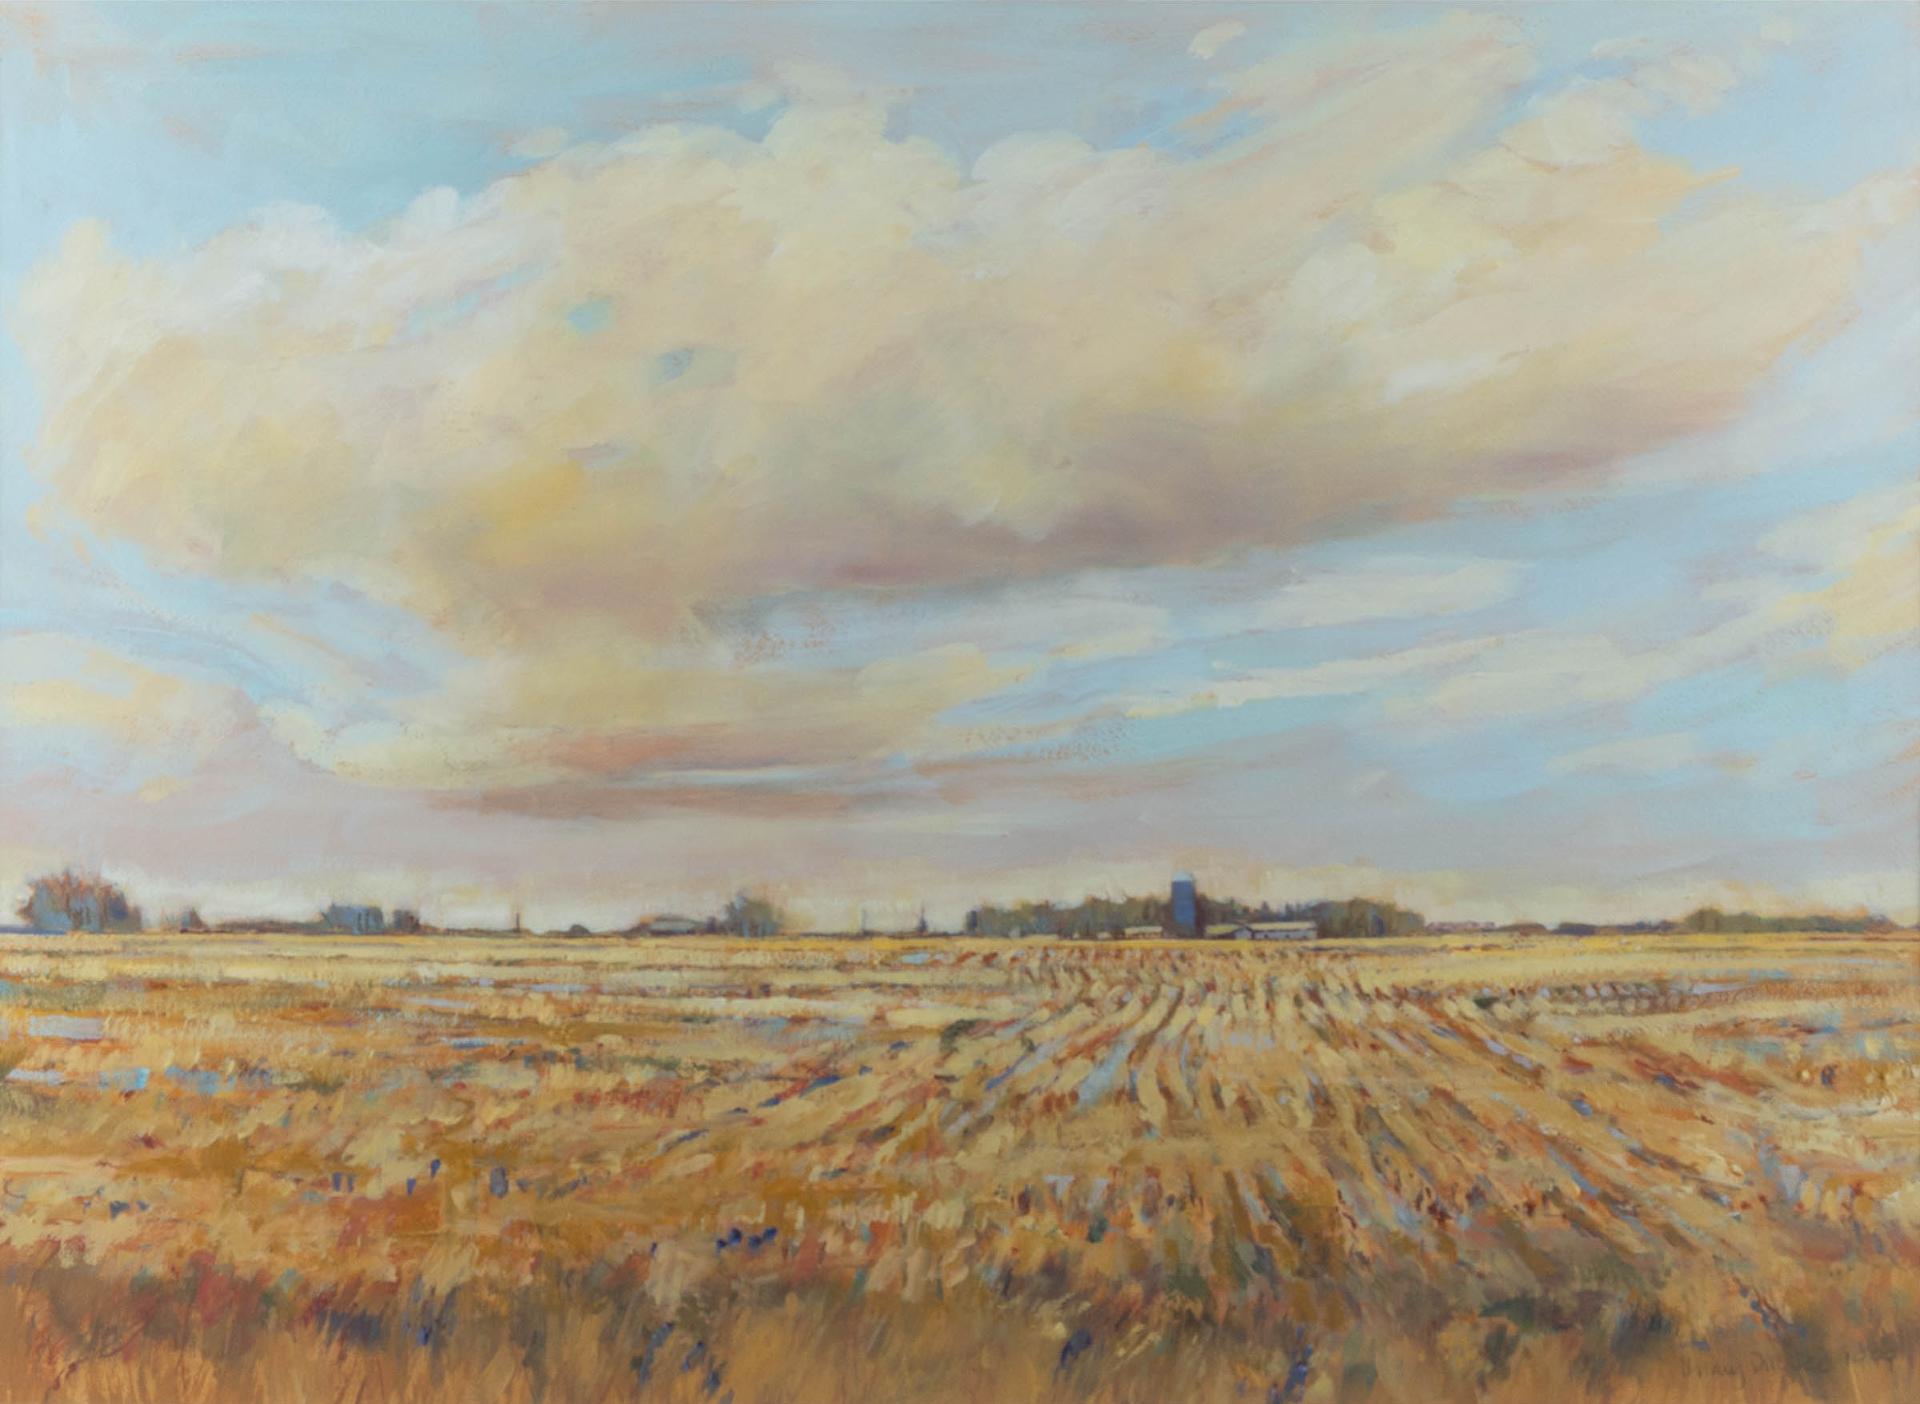 Hilary Prince (1945) - Fall Field, Alberta, 1999